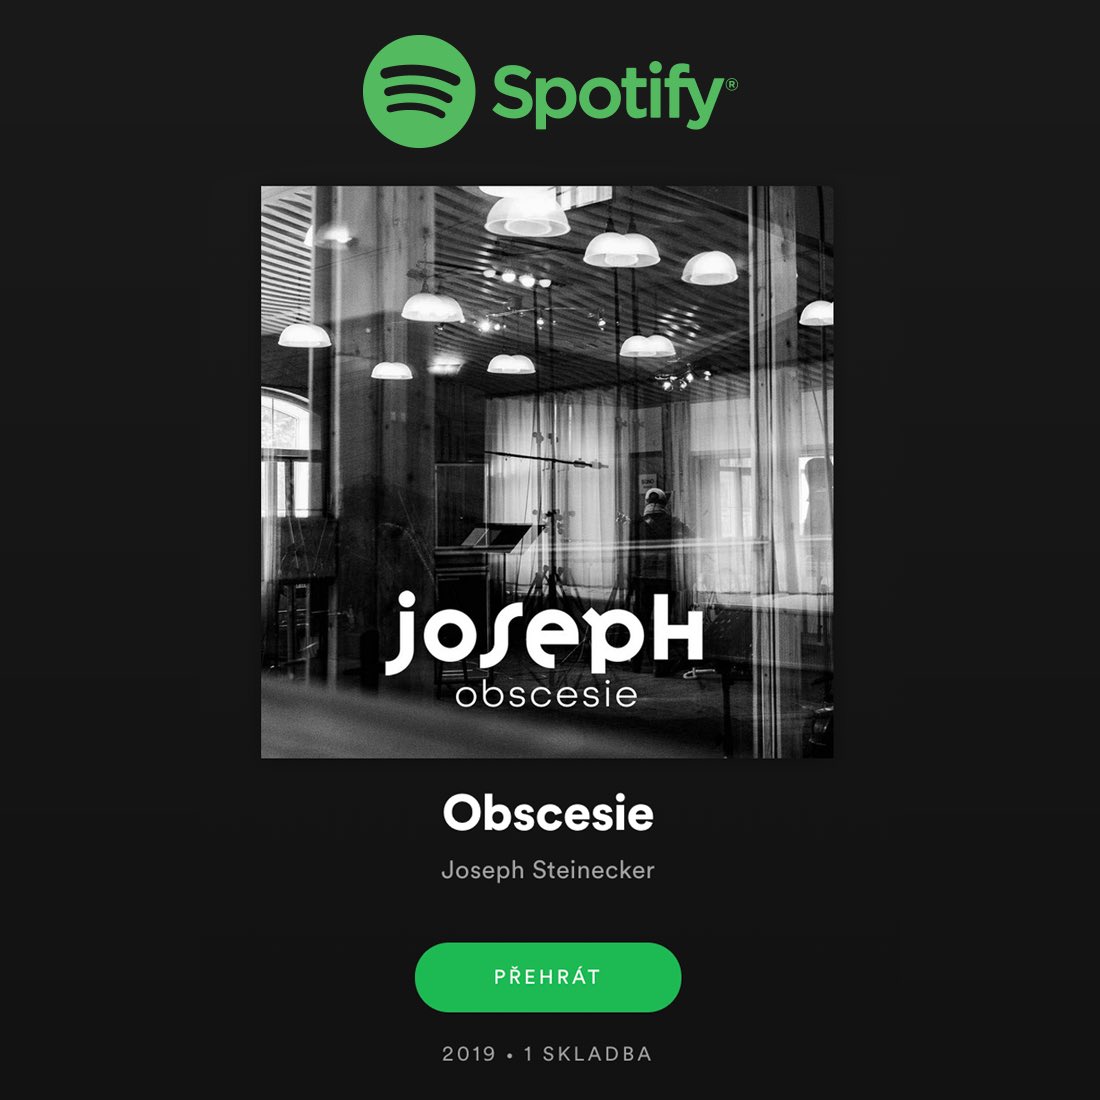 New singel 'Obscesie' on Spotify & iTunes

open.spotify.com/album/1kdn20iq…

itunes.apple.com/album/id148984…

#songwriter #slovakmusic #guitarist #singersongwriter